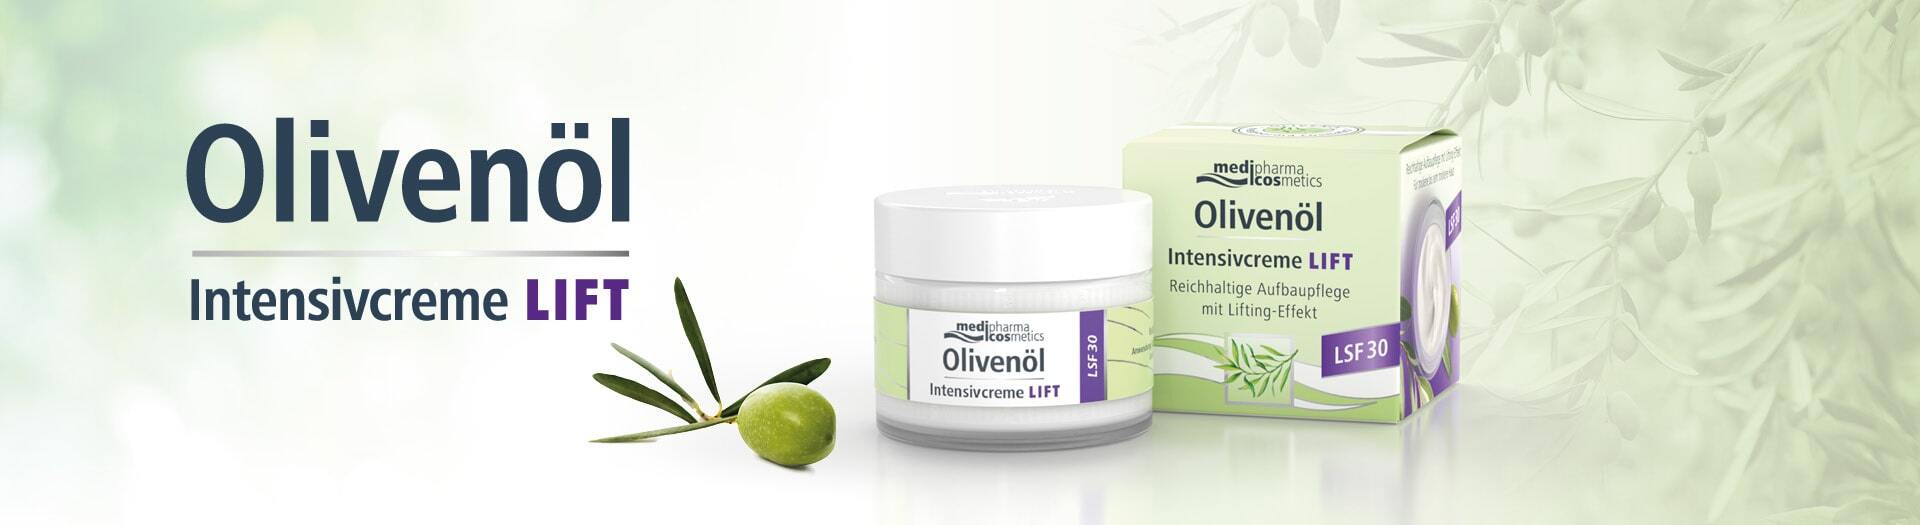 Olivenöl Intensivcreme LIFT